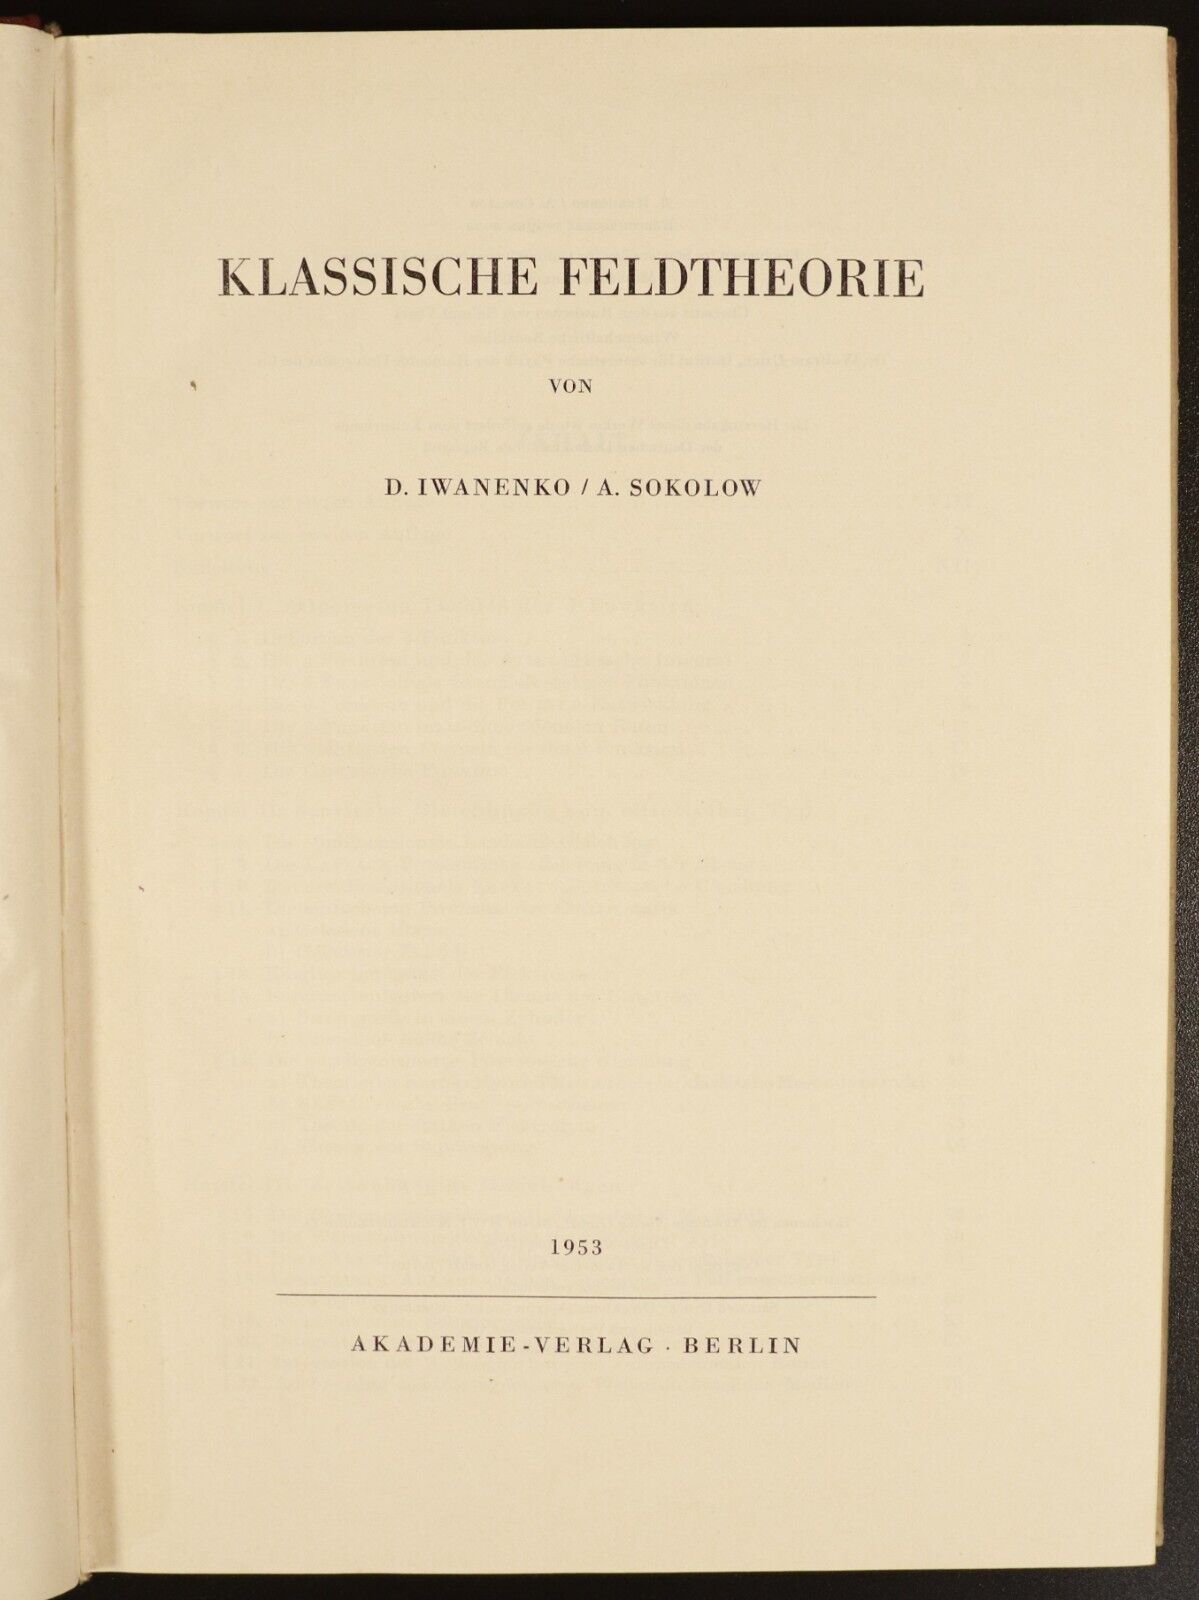 1953 Klassische Feldtheorie by D. Iwanenko & A. Sokolow Vintage Science Book - 0